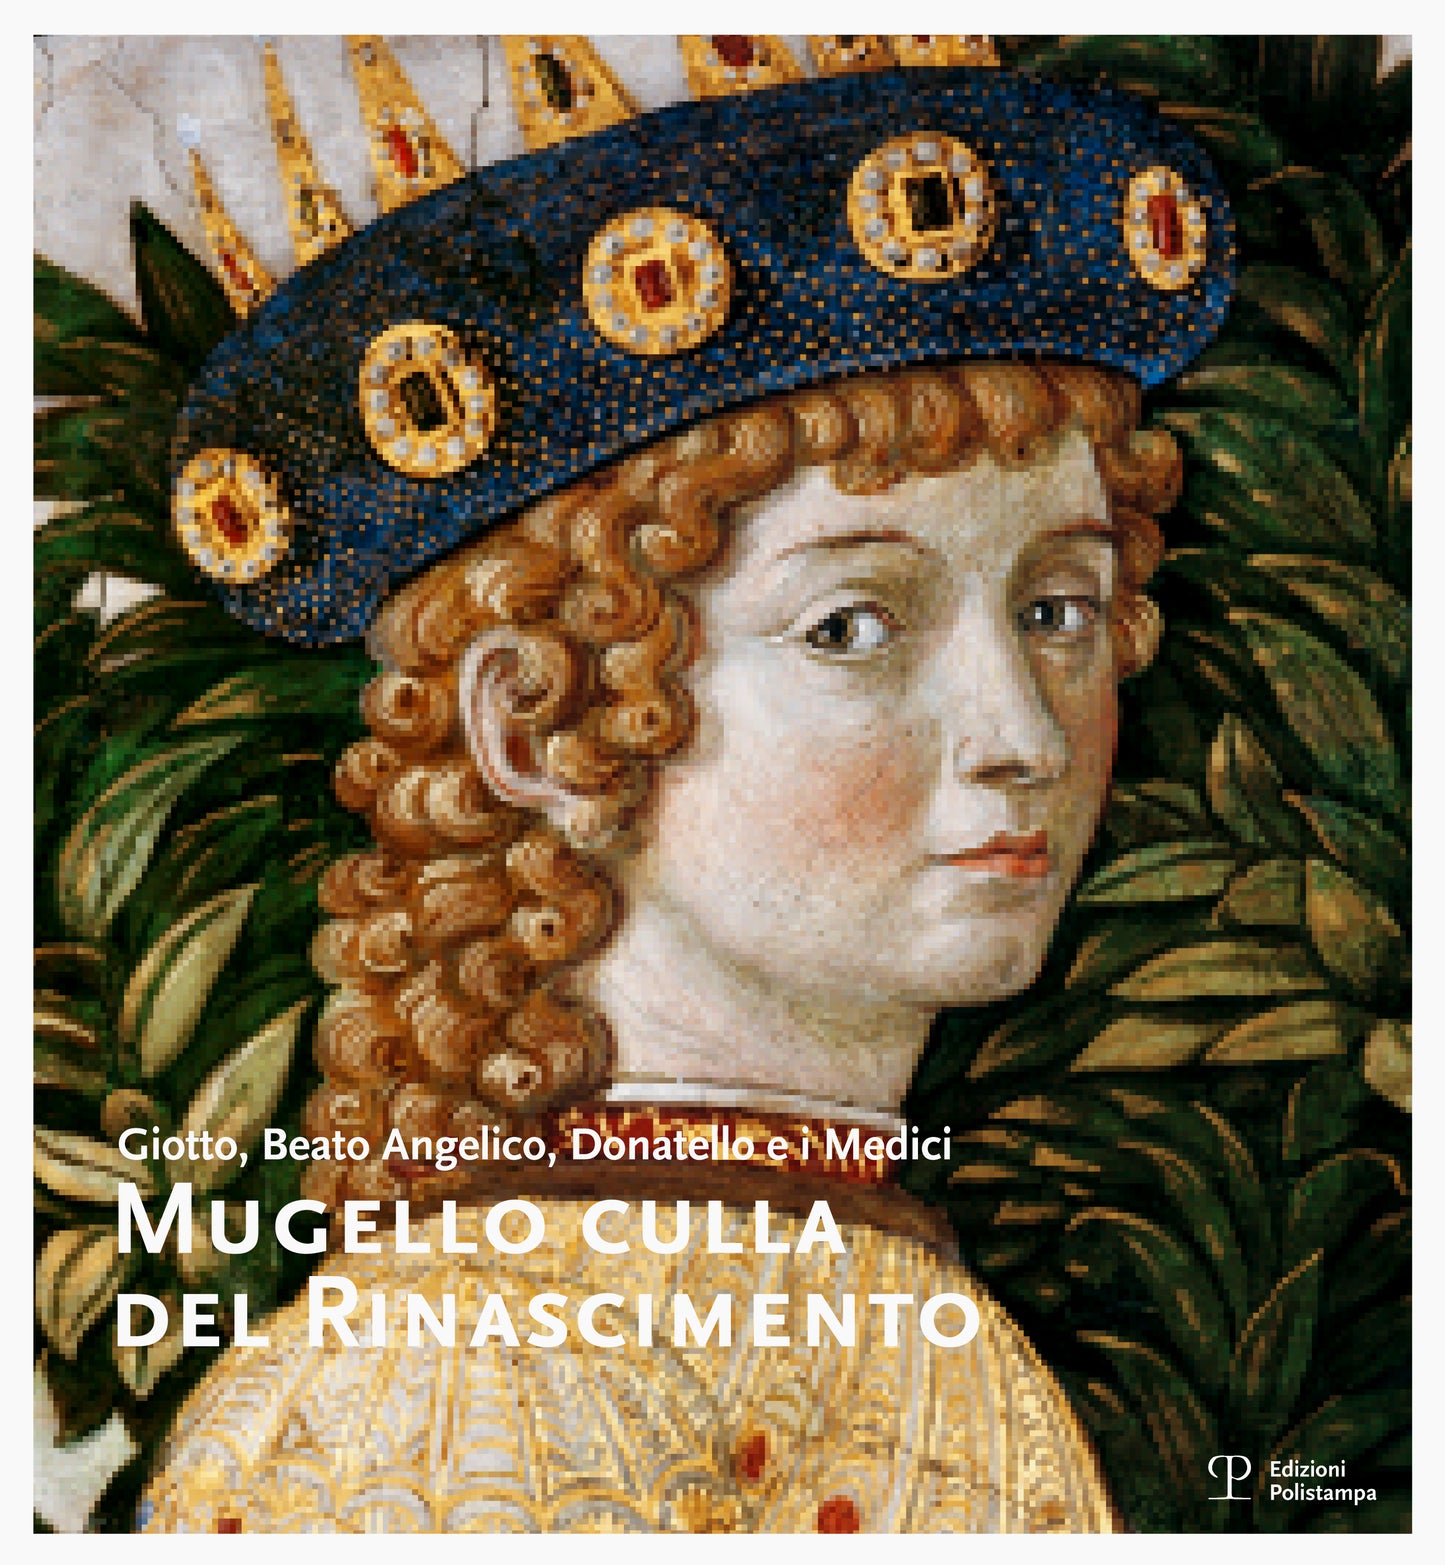 The Mugello, Cradle of the Renaissance